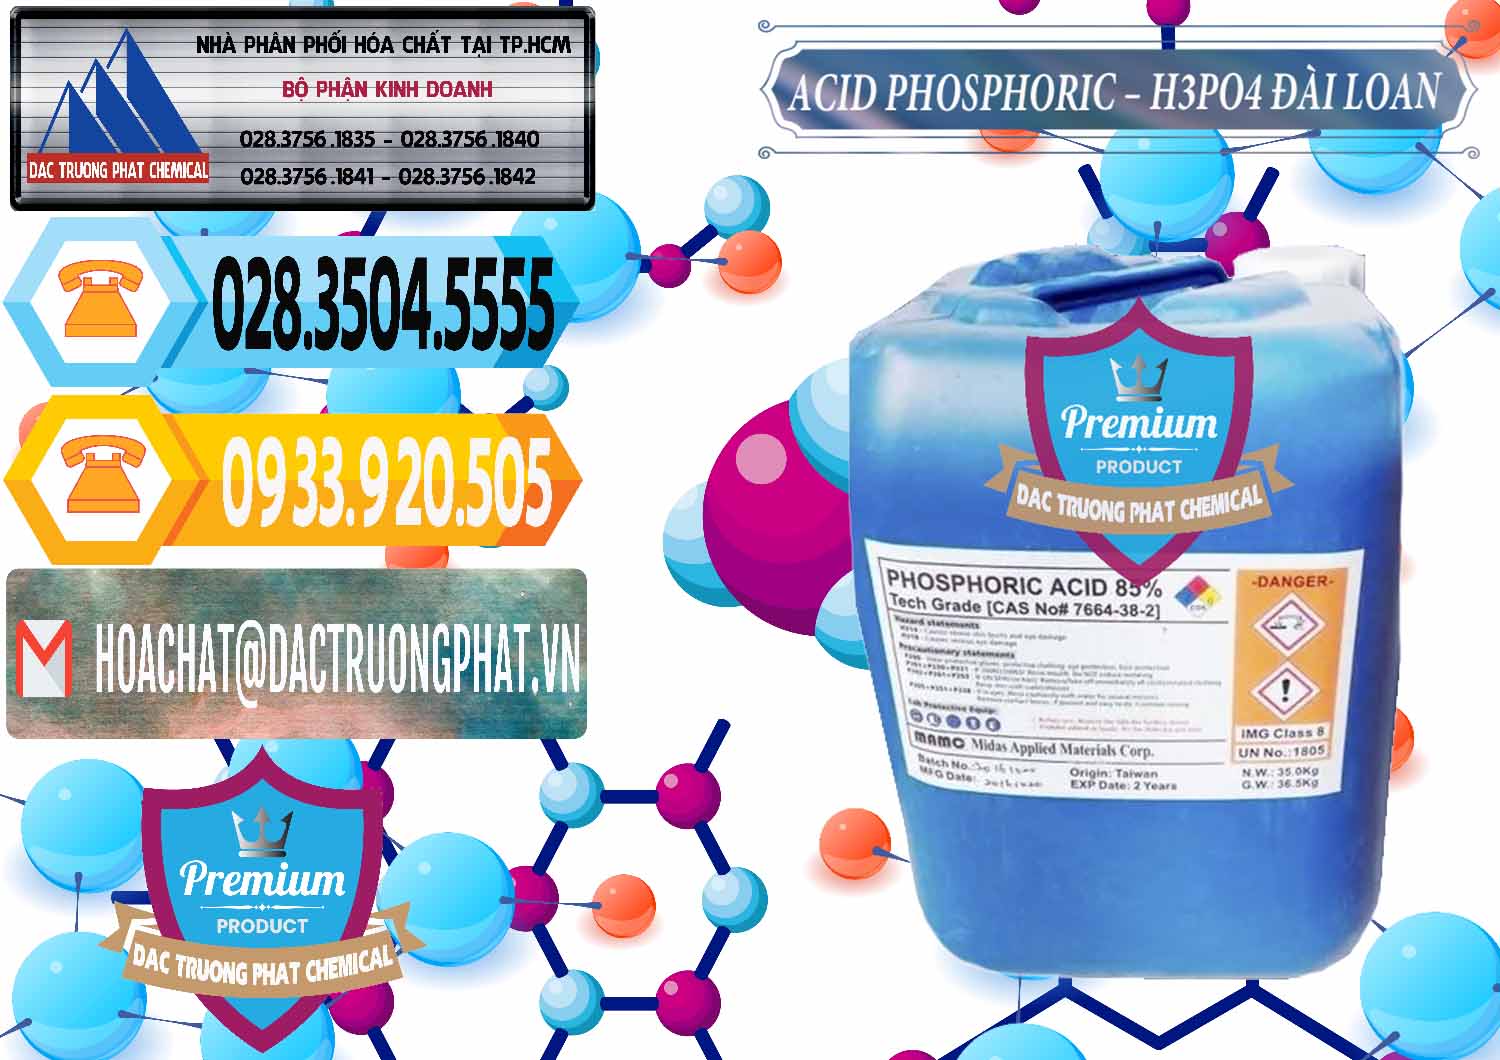 Cty kinh doanh ( bán ) Axit Phosphoric - Acid Phosphoric H3PO4 85% Đài Loan Taiwan - 0351 - Chuyên bán ( cung cấp ) hóa chất tại TP.HCM - hoachattayrua.net